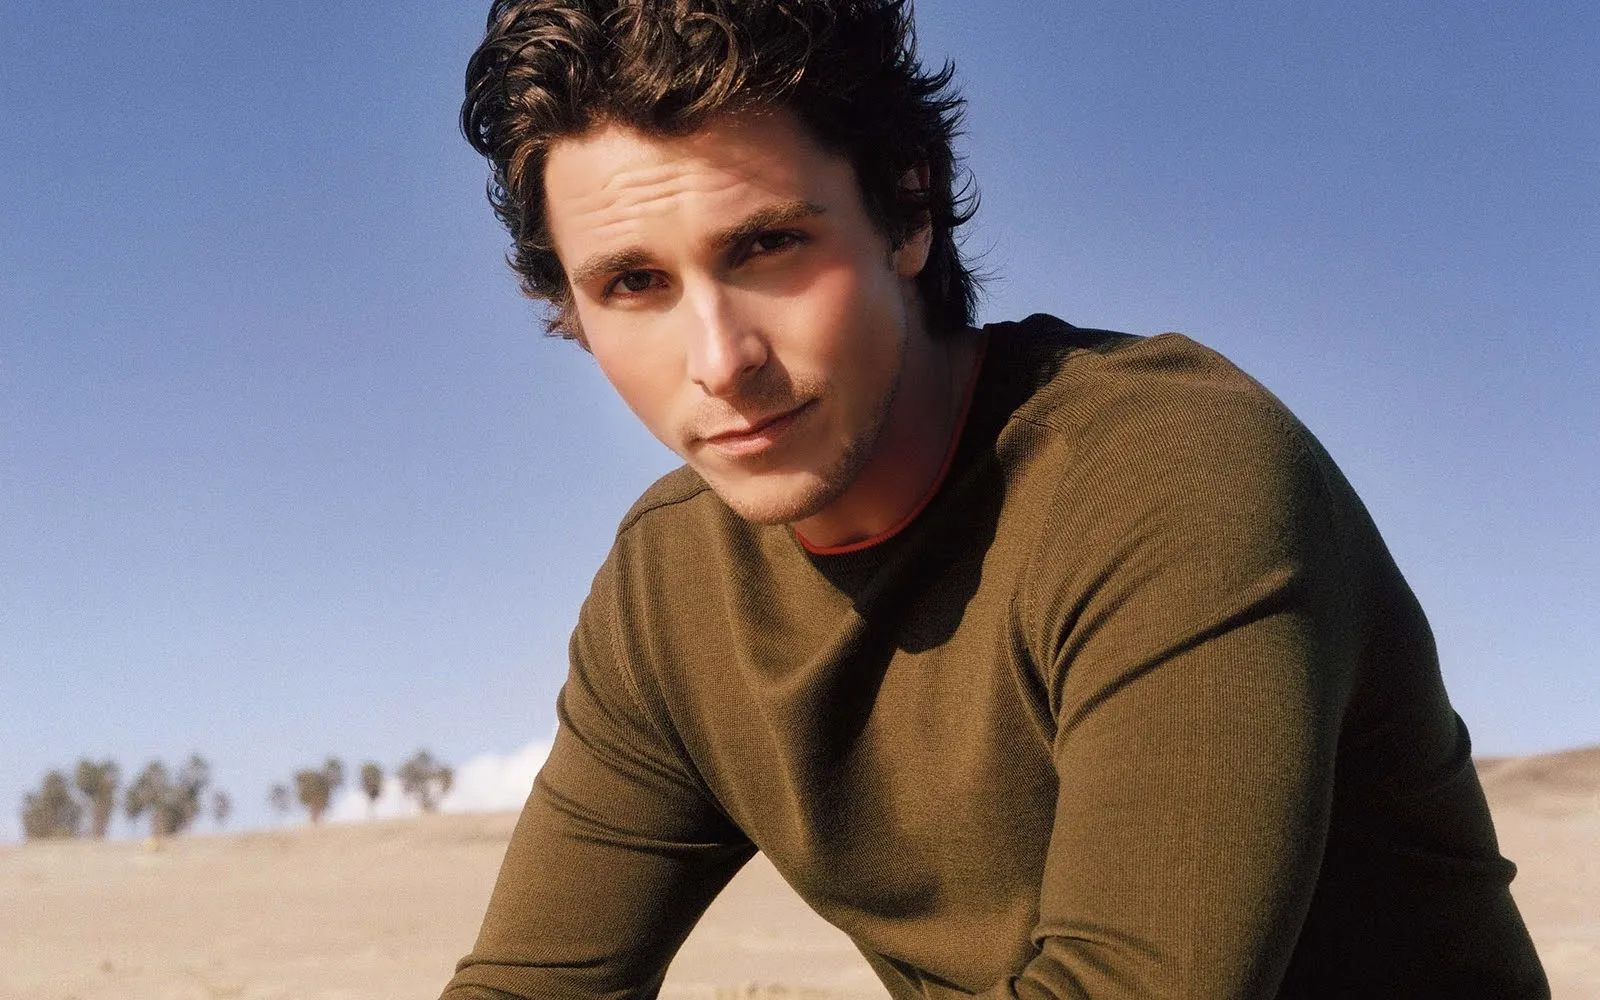  de Imagenes Gratuitas: Christian Bale - Modelos - Rostros de hombres ...